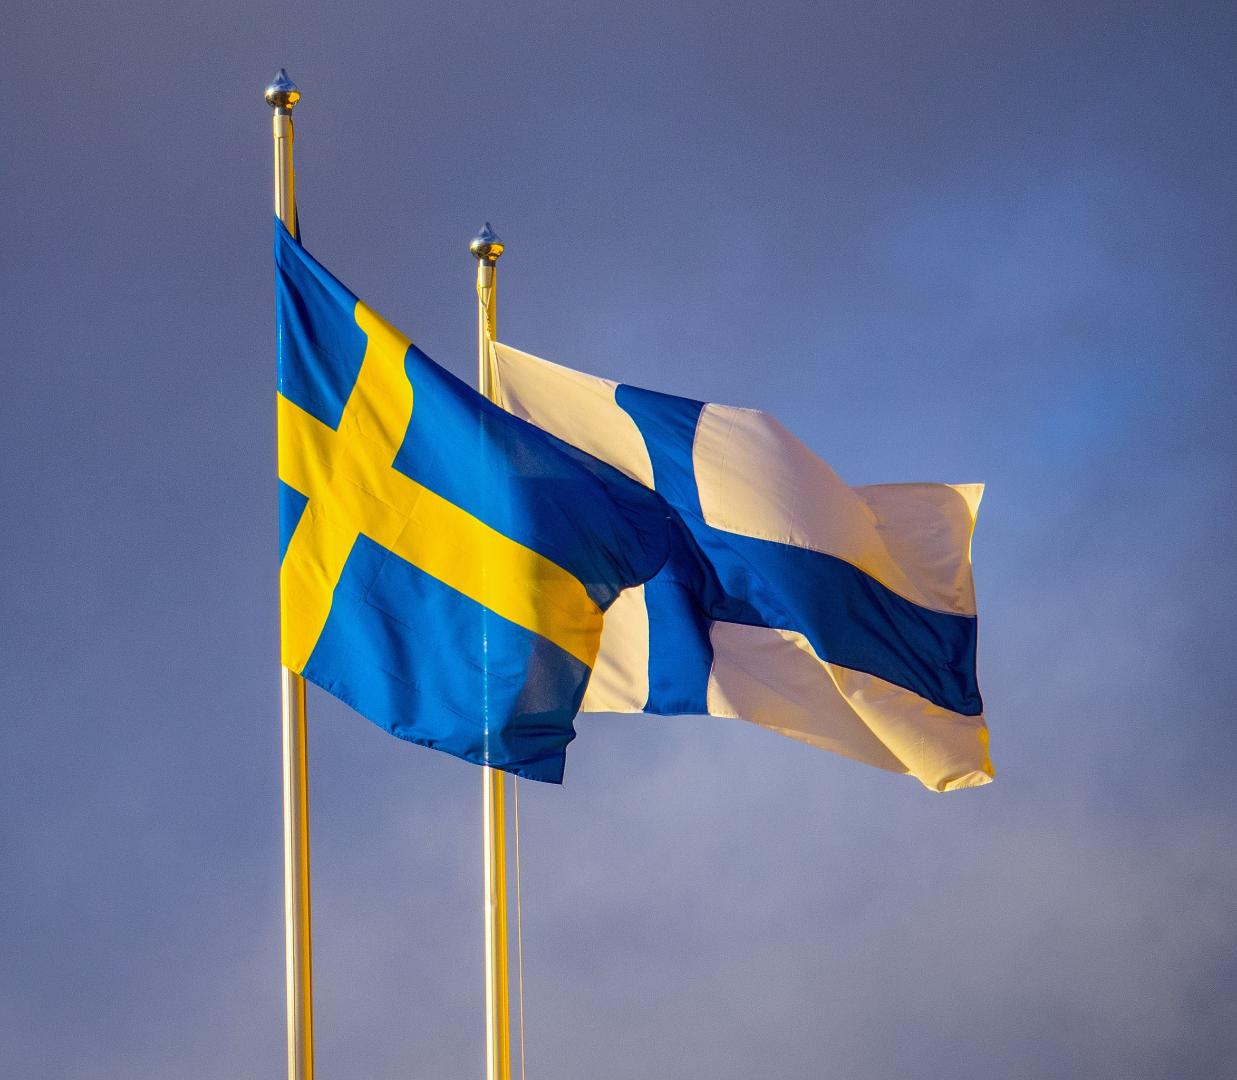 https://www.kas.de/o/adaptive-media/image/17251147/hd-resolution/Swedish_and_Finnish_flag_flying_in_front_of_Ikea_Raisio%2C_Finland.jpg